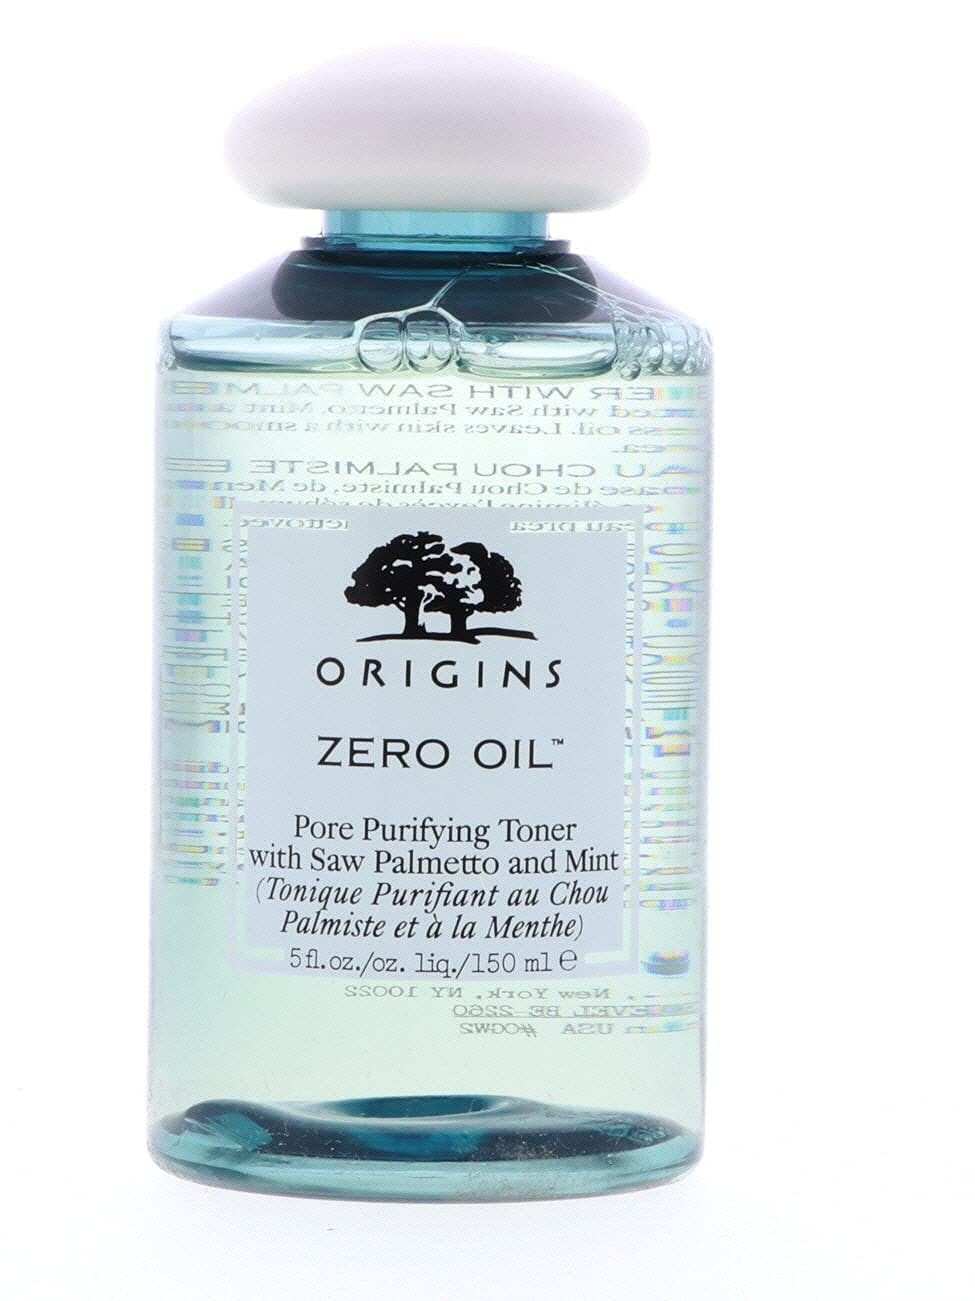 Origins Zero Oil Pore Purifying Toner Тонік, що очищає пори, для обличчя